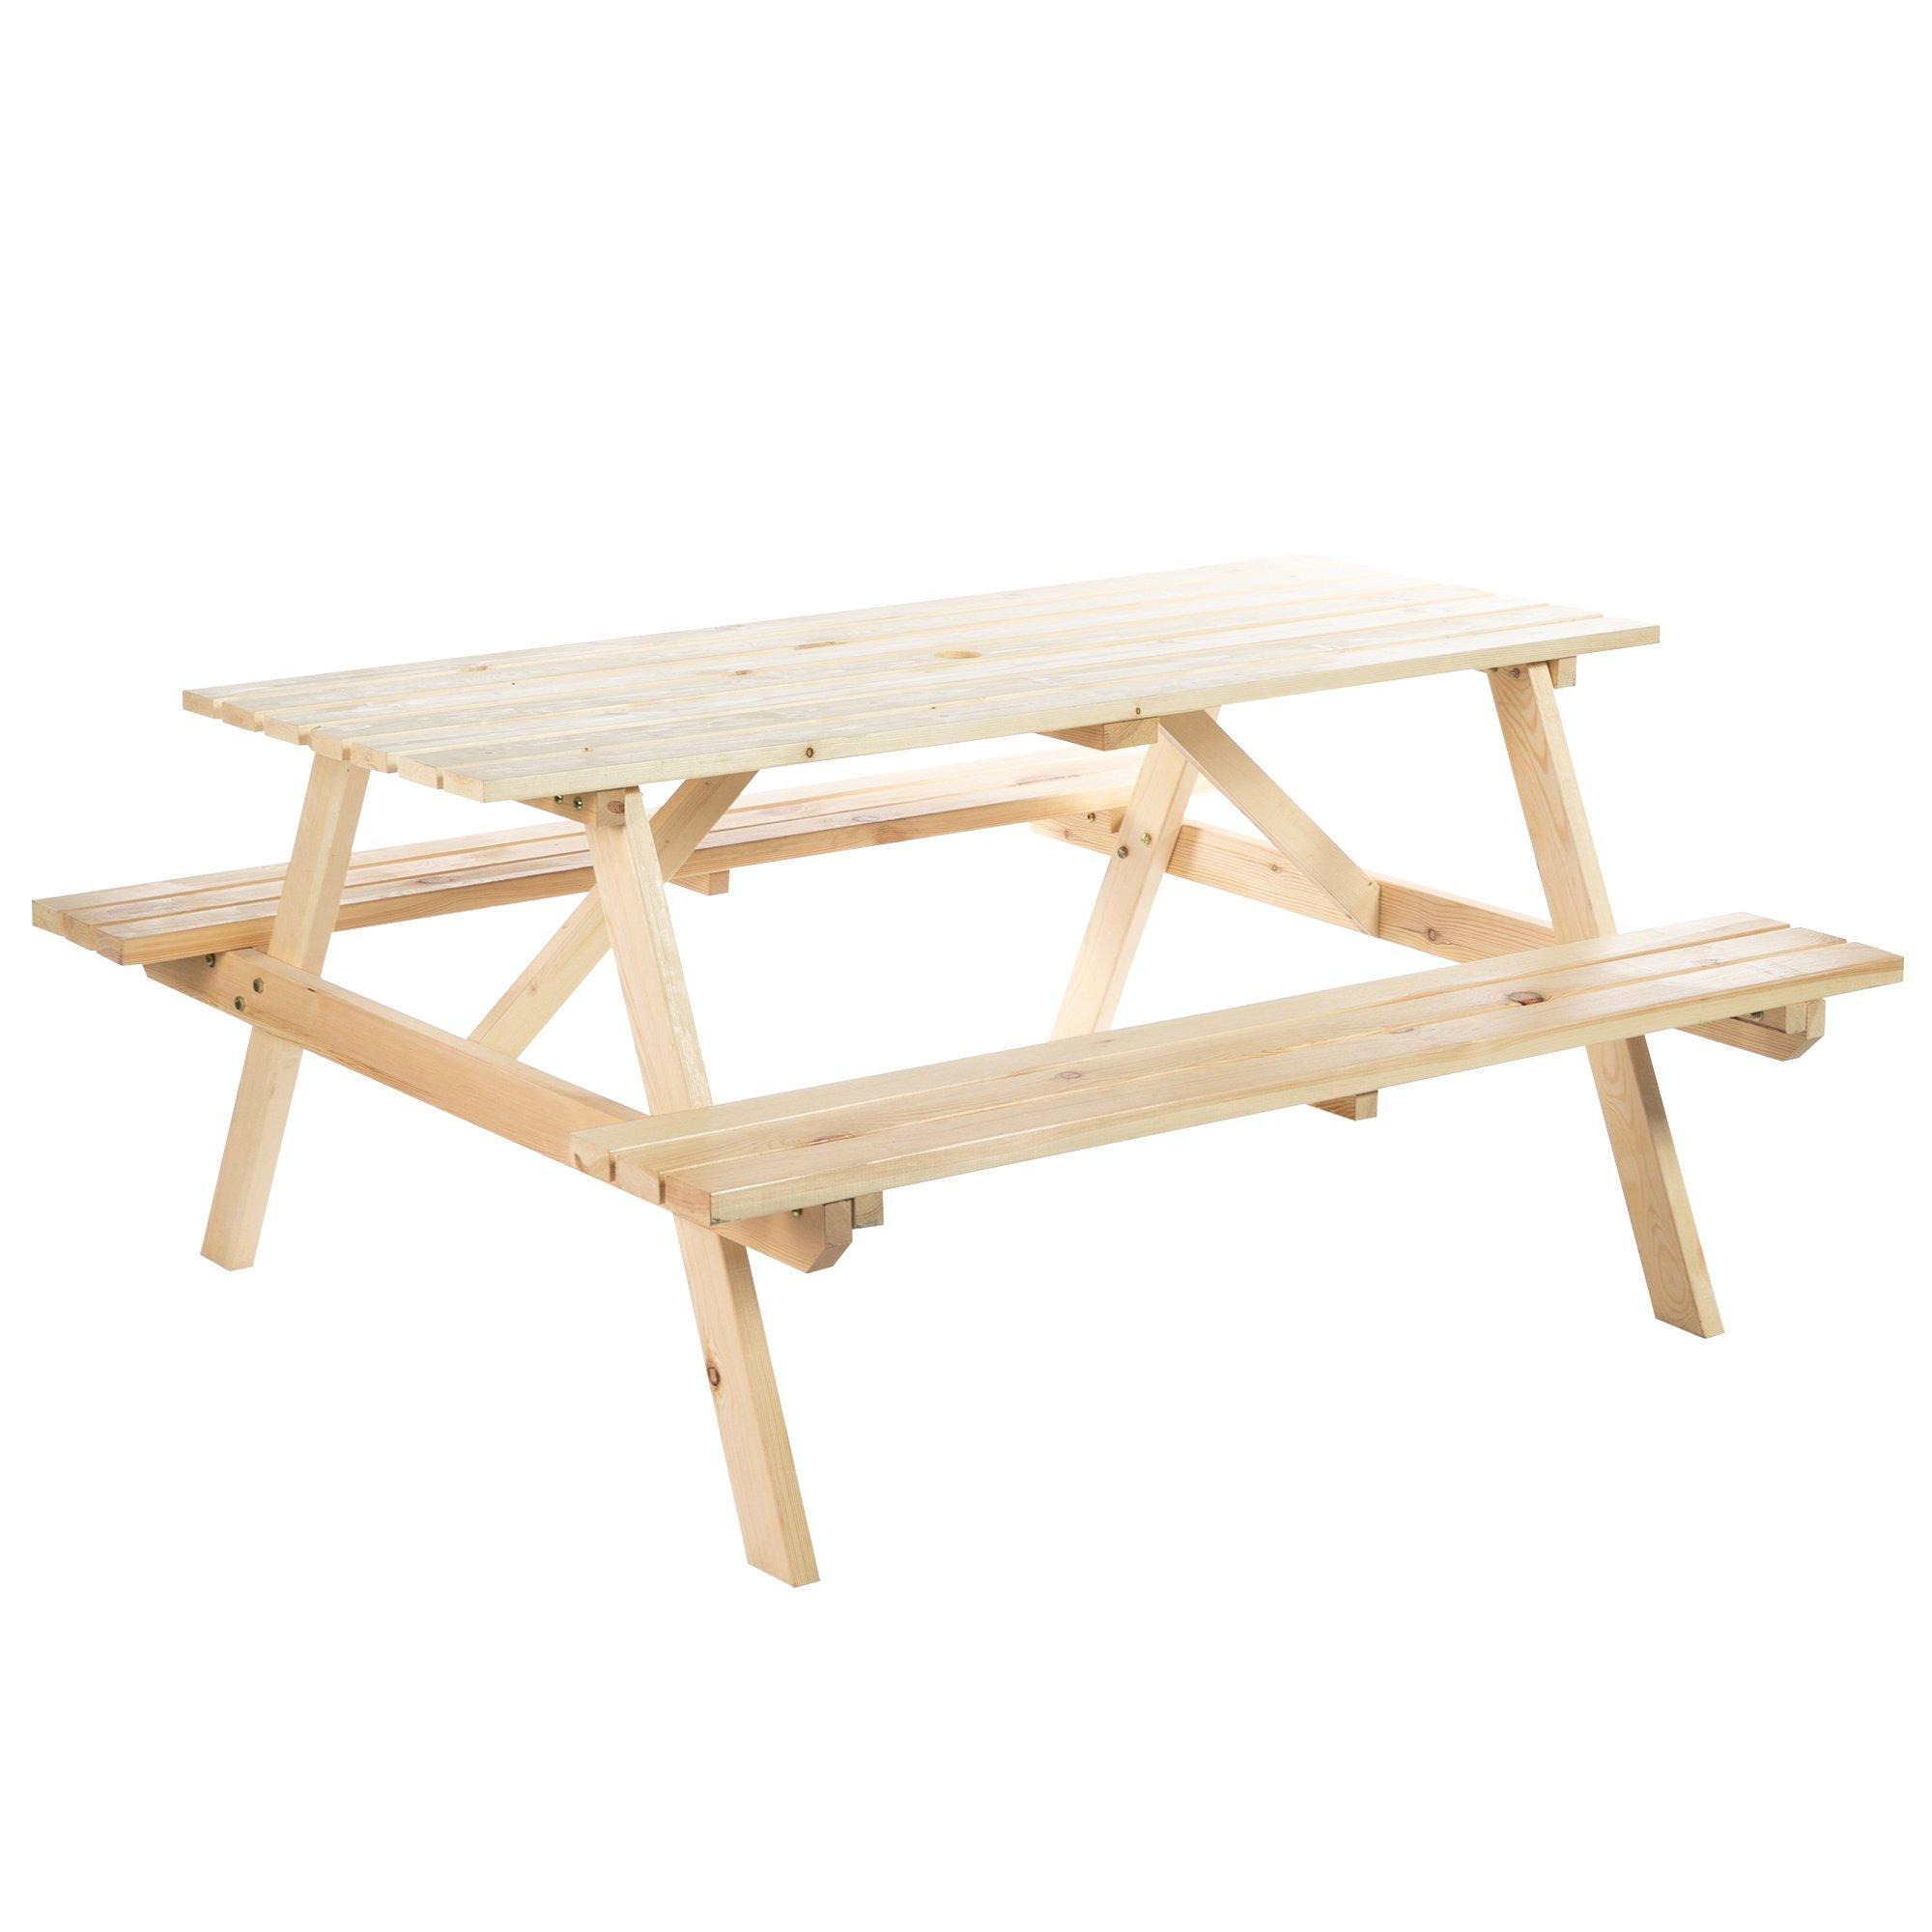 5.8FT Outdoor Wooden Picnic Table Bench Garden Patio Chair 4 Seats - image 1